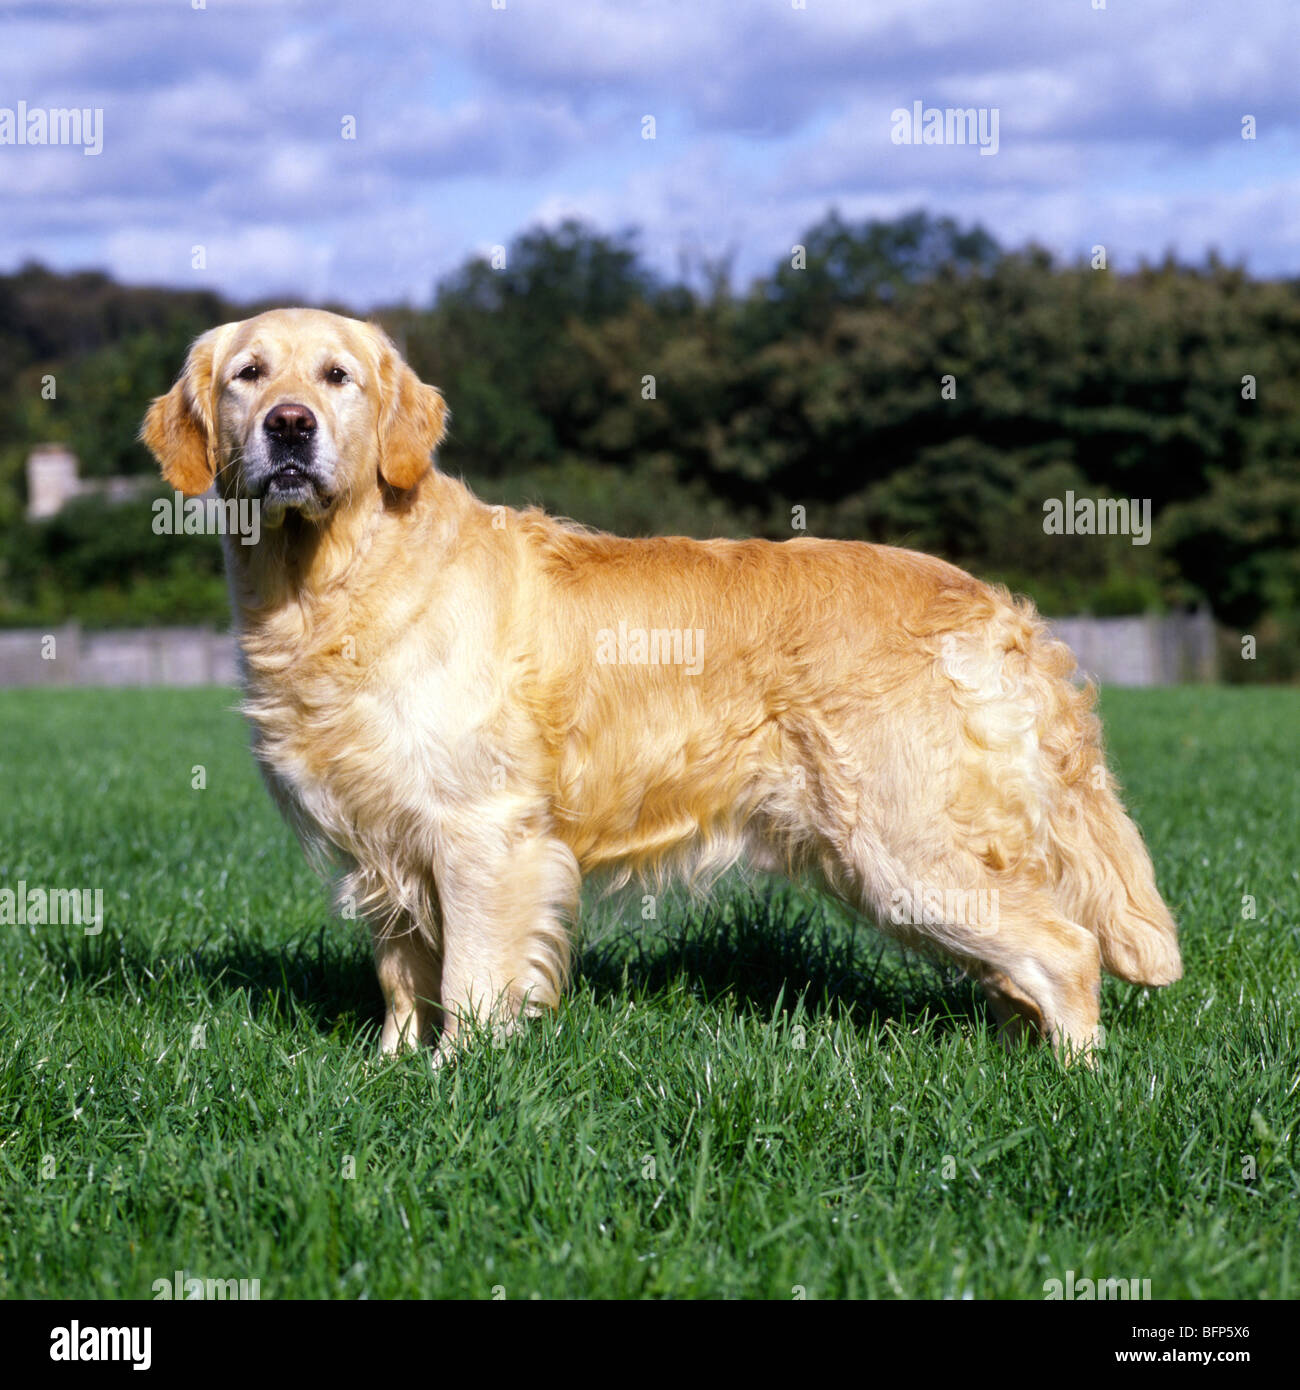 champion golden retriever standing on grass Stock Photo - Alamy